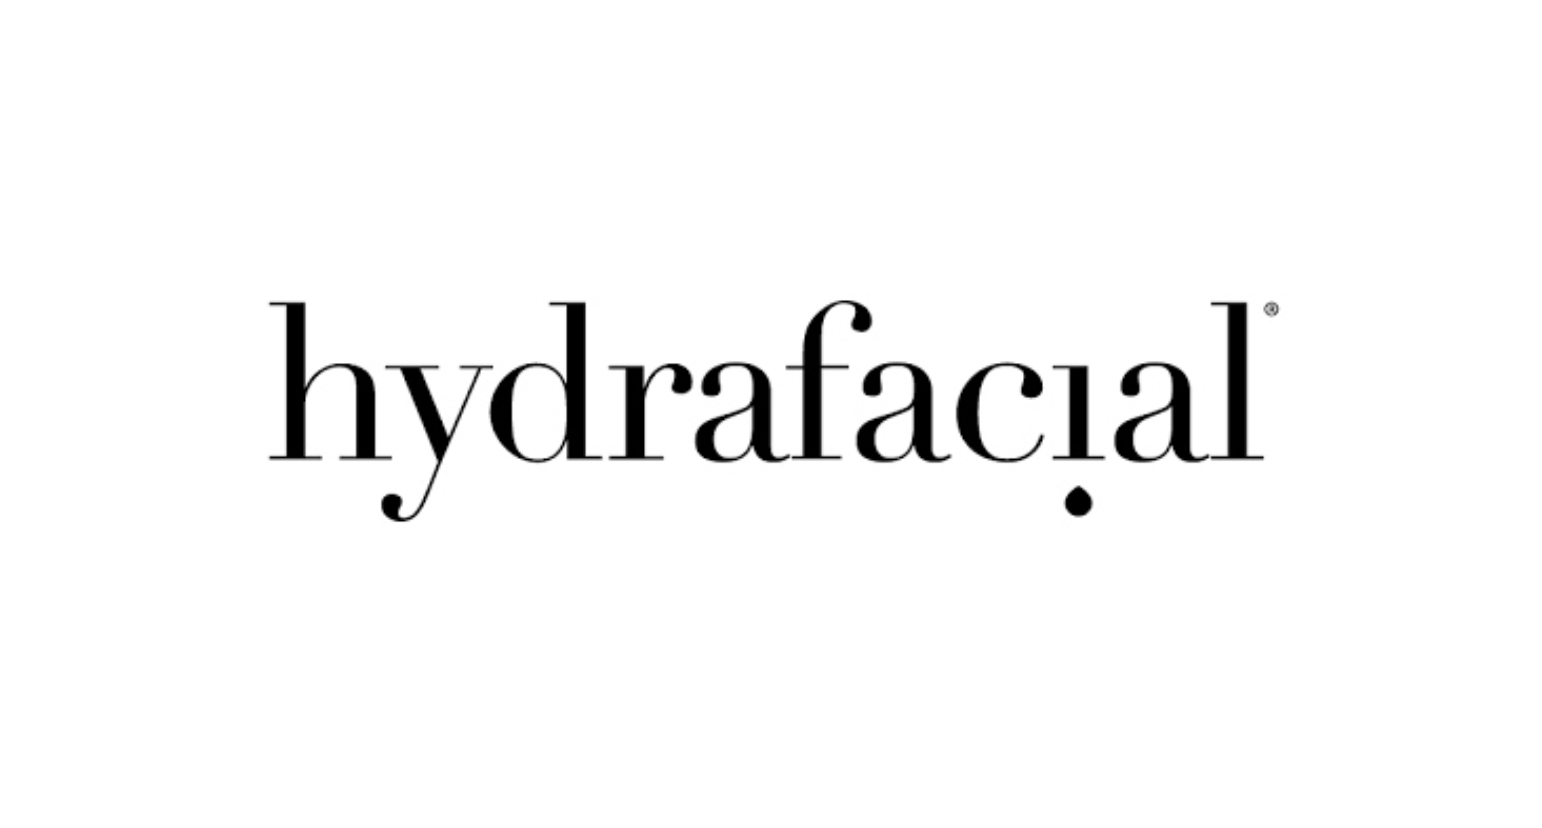 HydraFacial Posts Record Results